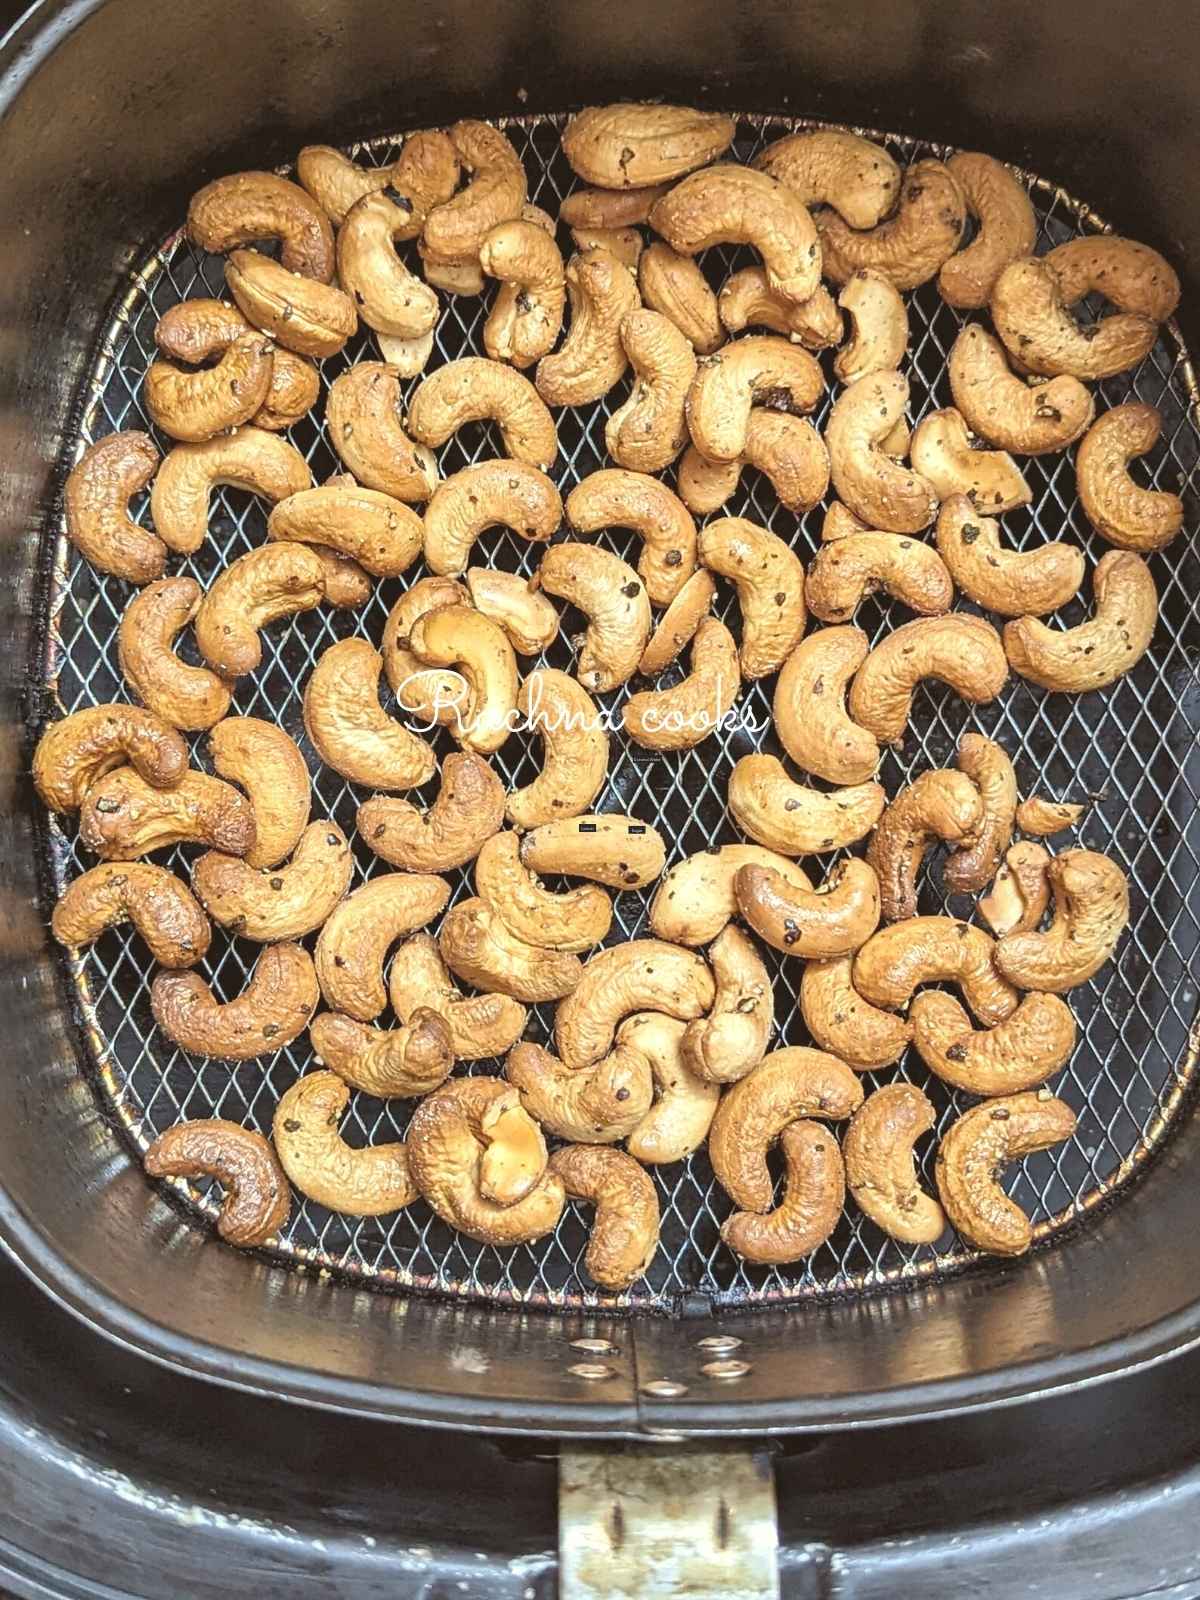 Air fried cashewnuts in air fryer basket.